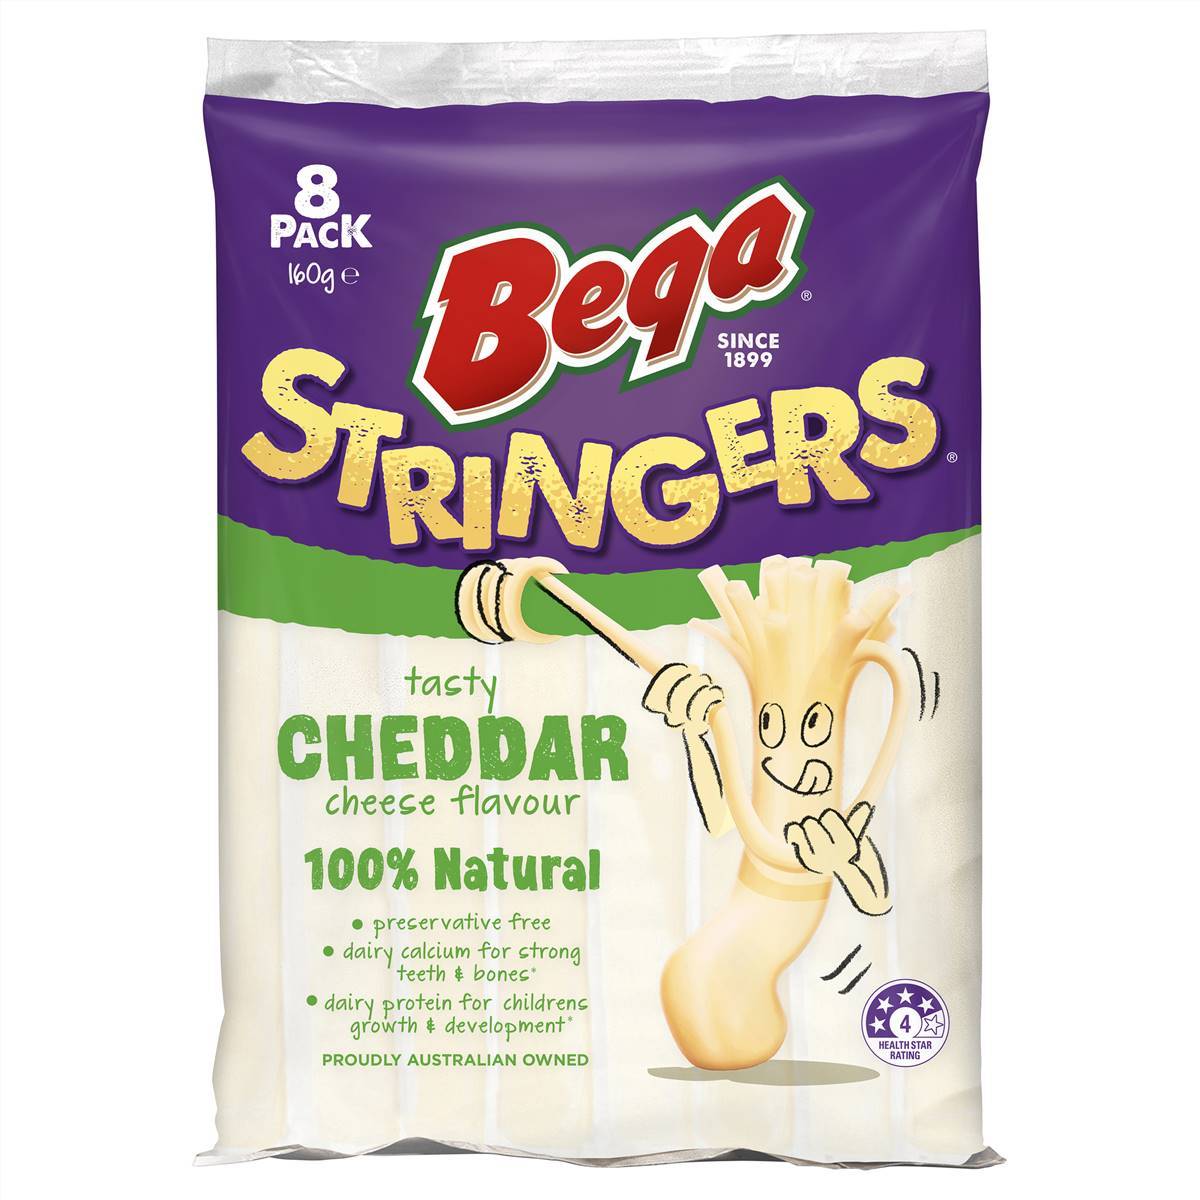 Bega Stringers Cheddar Cheese 8 Pack